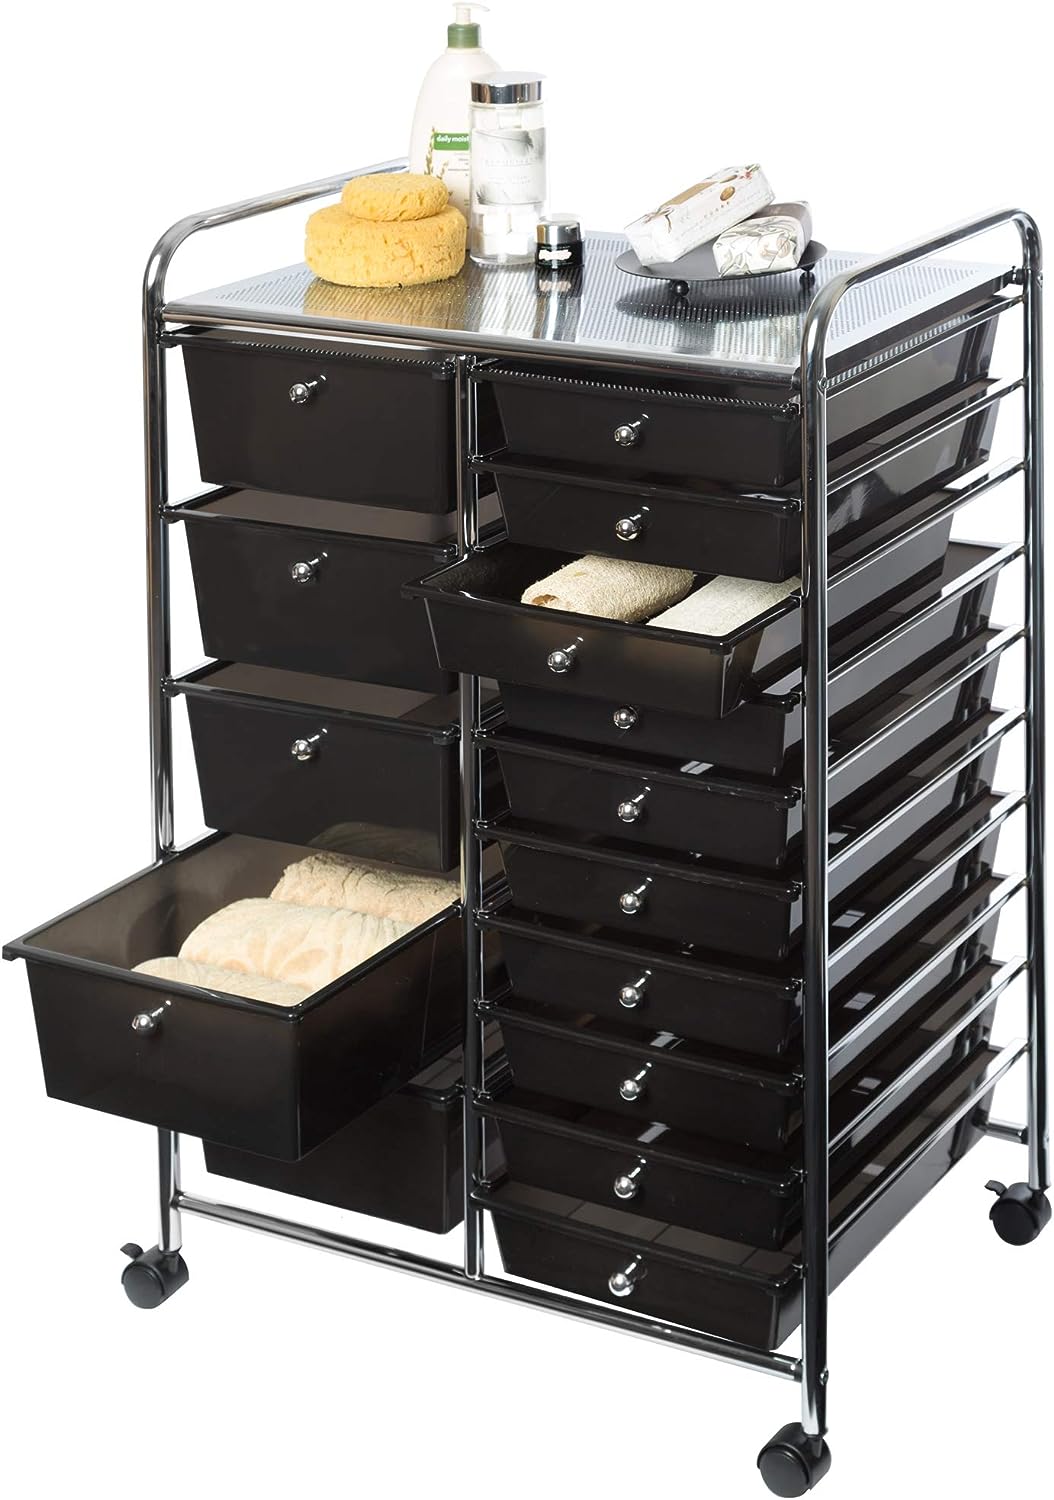 Seville Classics Rolling Utility Organizer Storage Cart, for Home Office, School, Classroom, Scrapbook, Hobby, Craft, 6-Bin